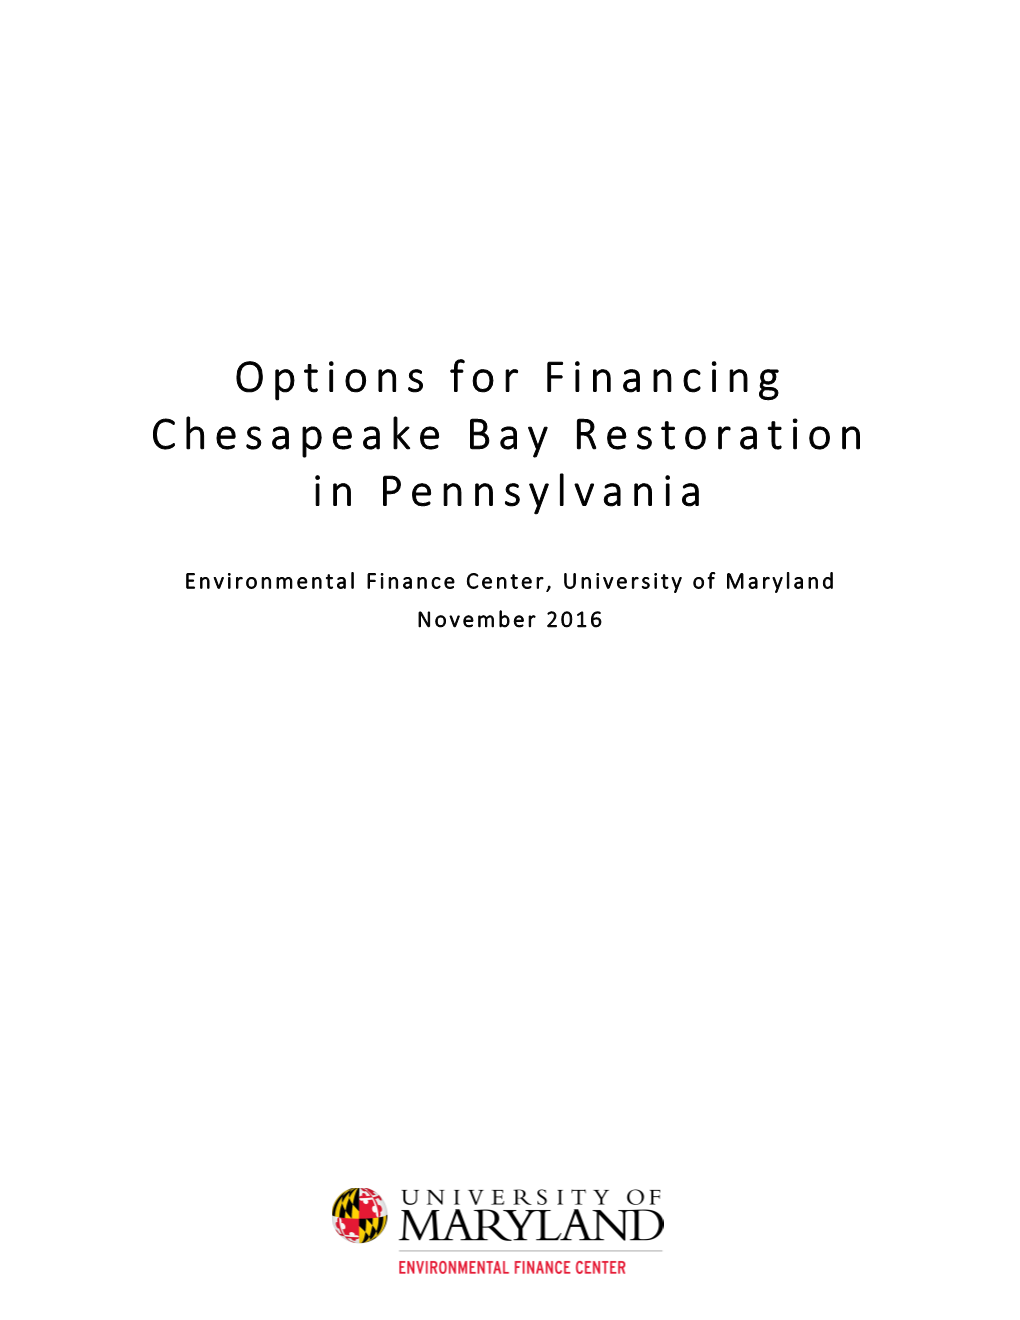 Options for Financing Chesapeake Bay Restoration in Pennsylvania